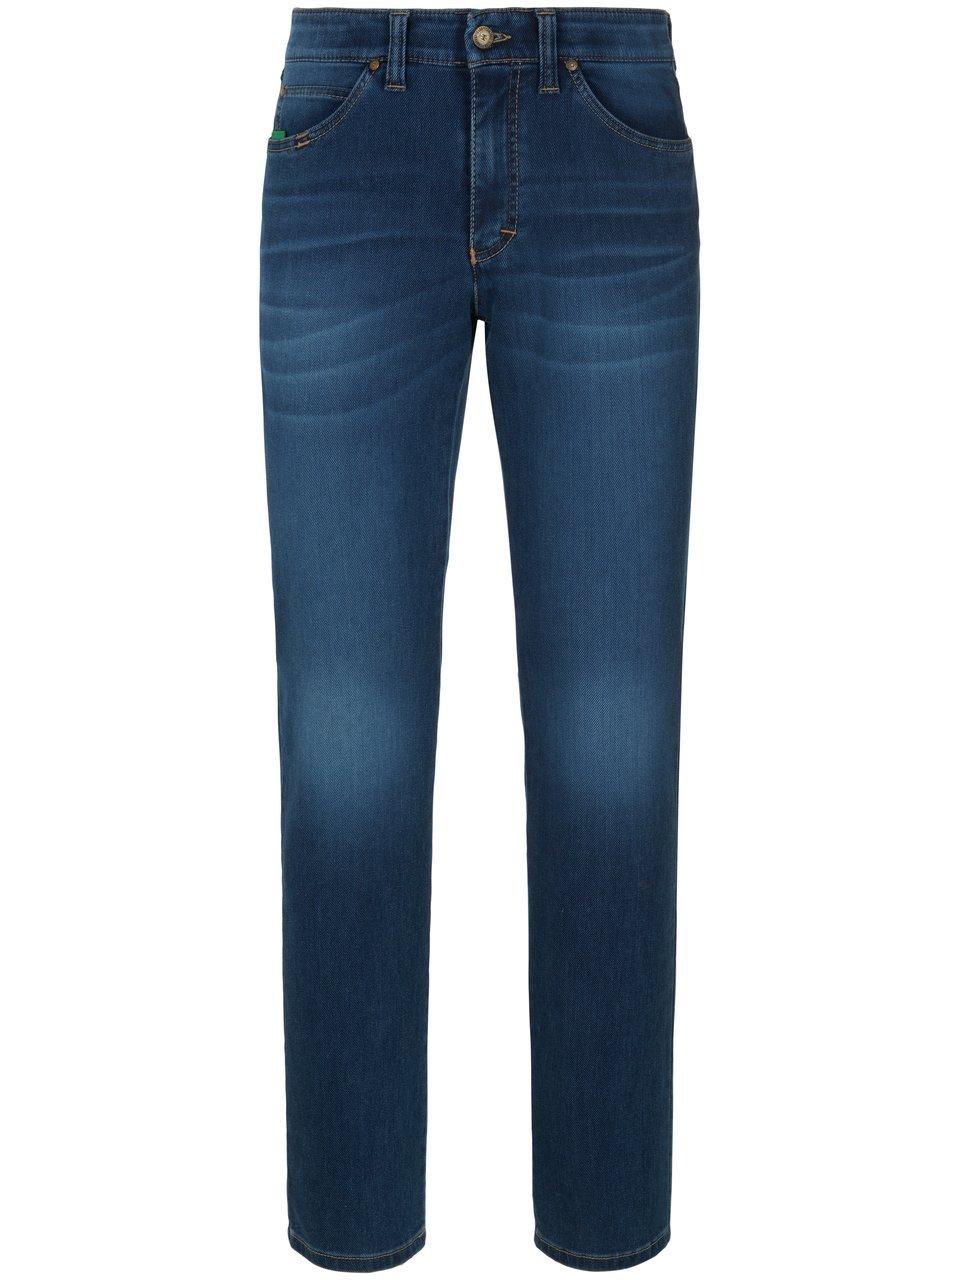 Jeans model Henry Van CLUB OF COMFORT denim